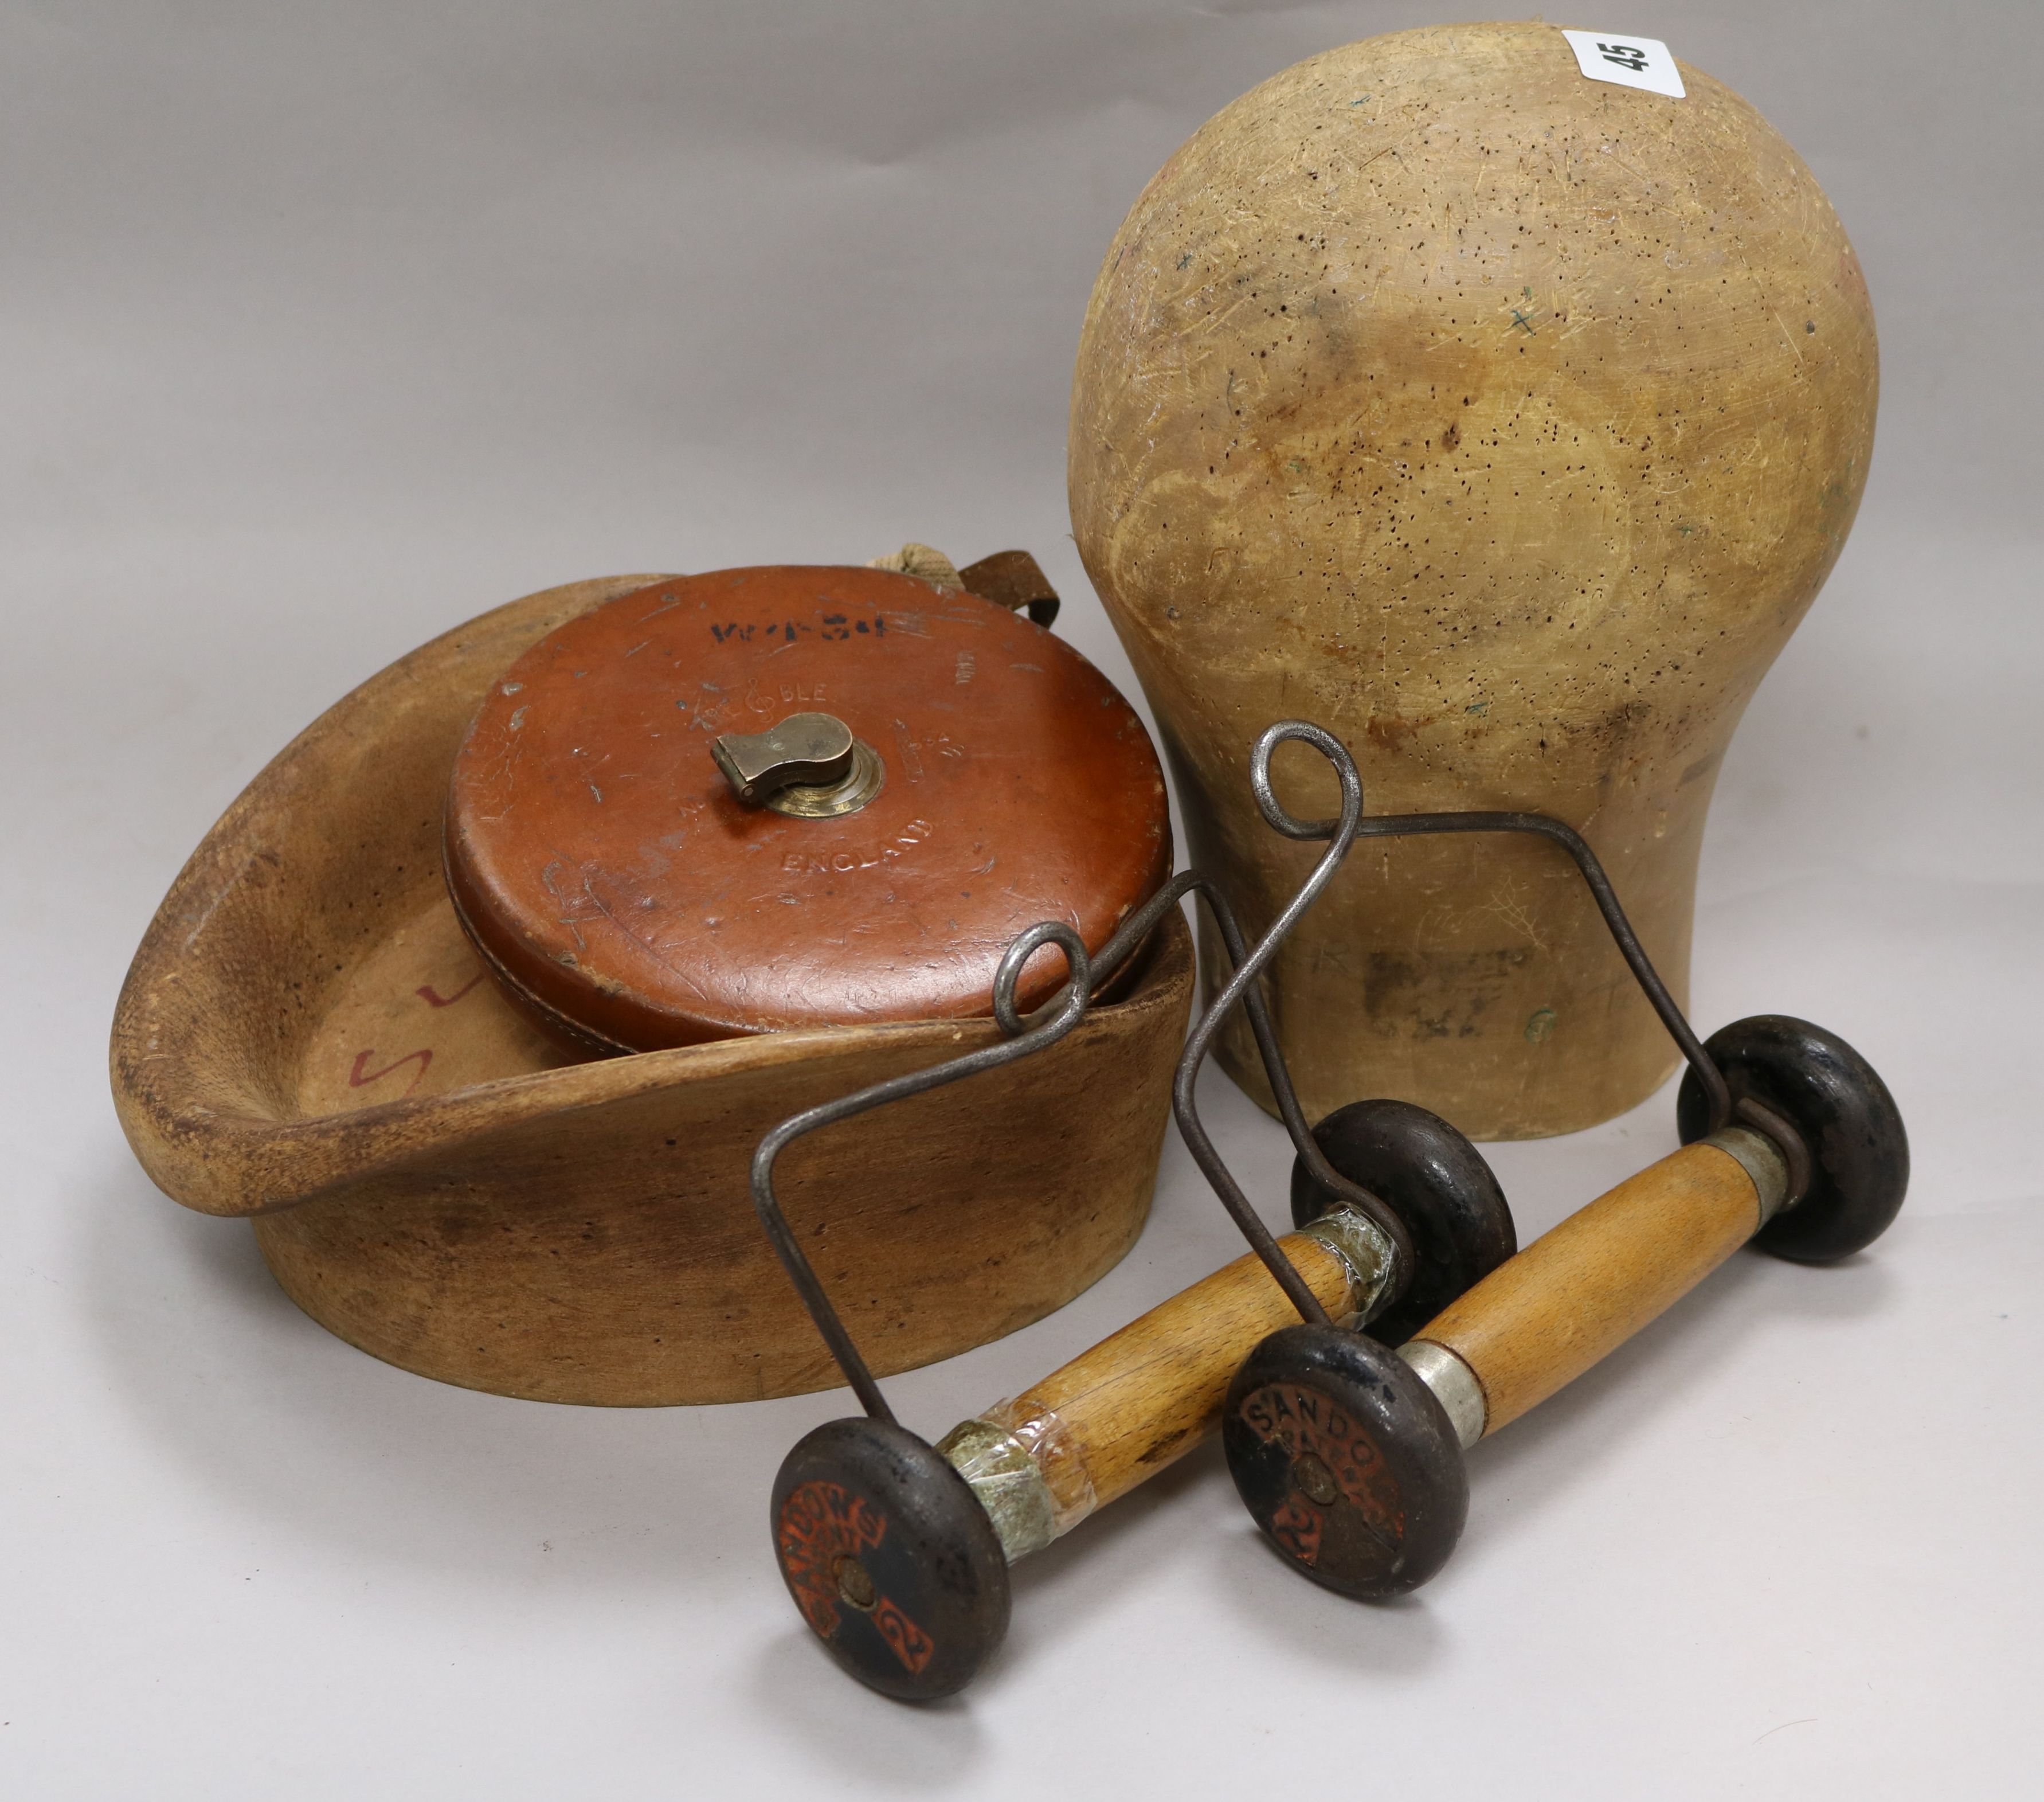 A hat stretcher, measure, hat block, copper vessell etc